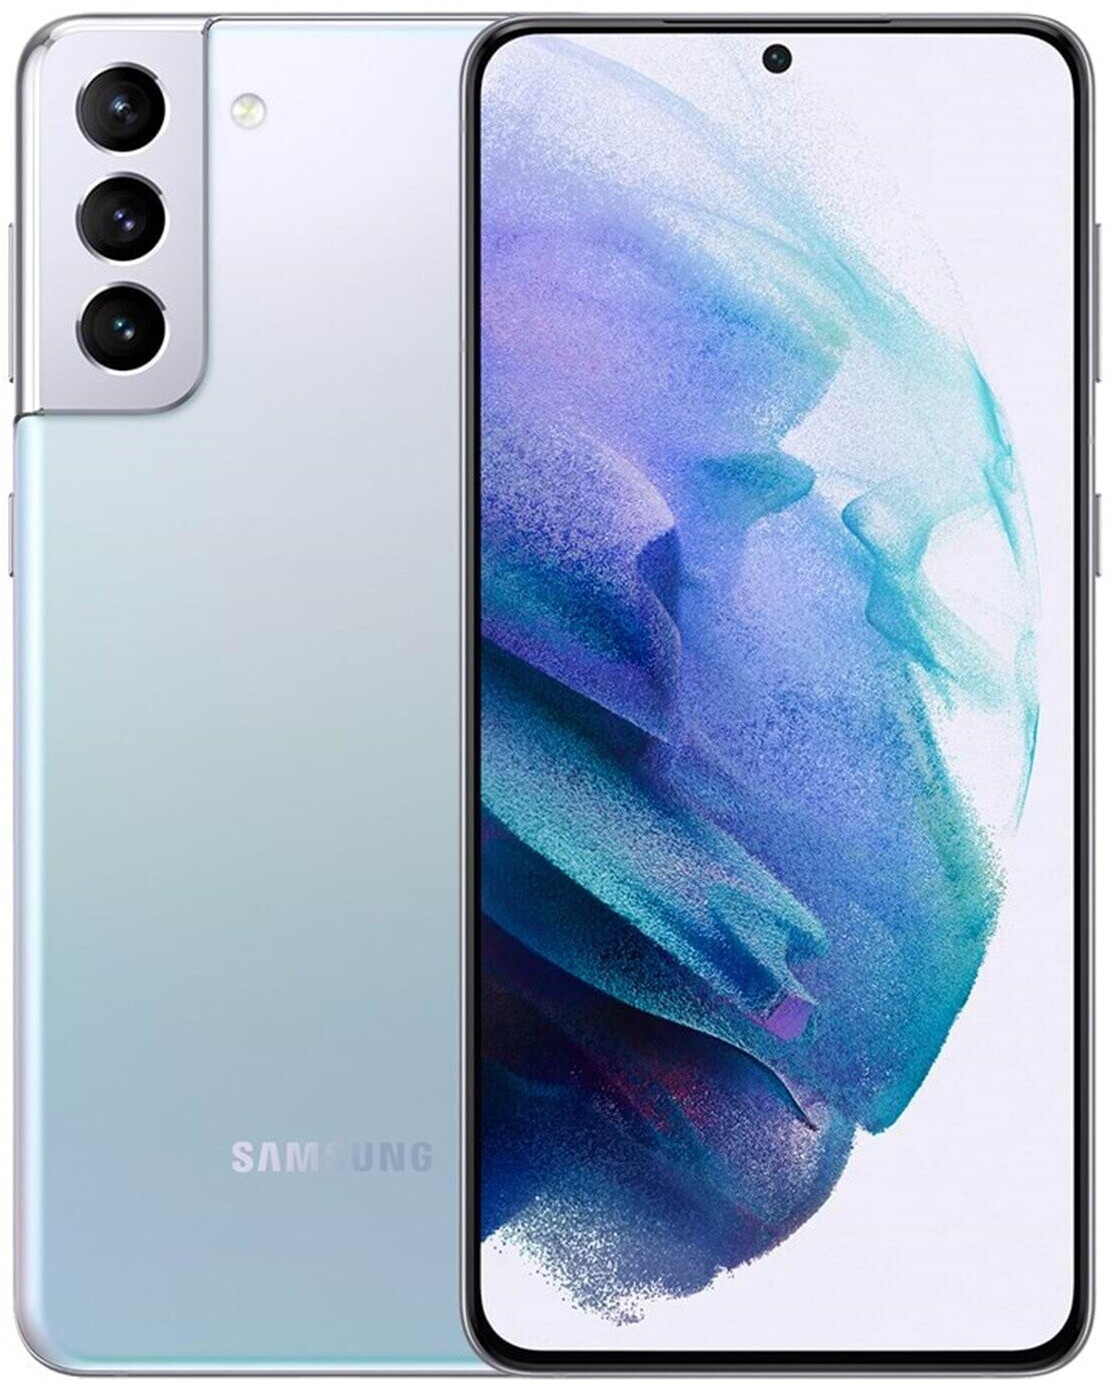 Buy Samsung Galaxy S21 Plus 5G 256GB Phantom Silver from £999.00